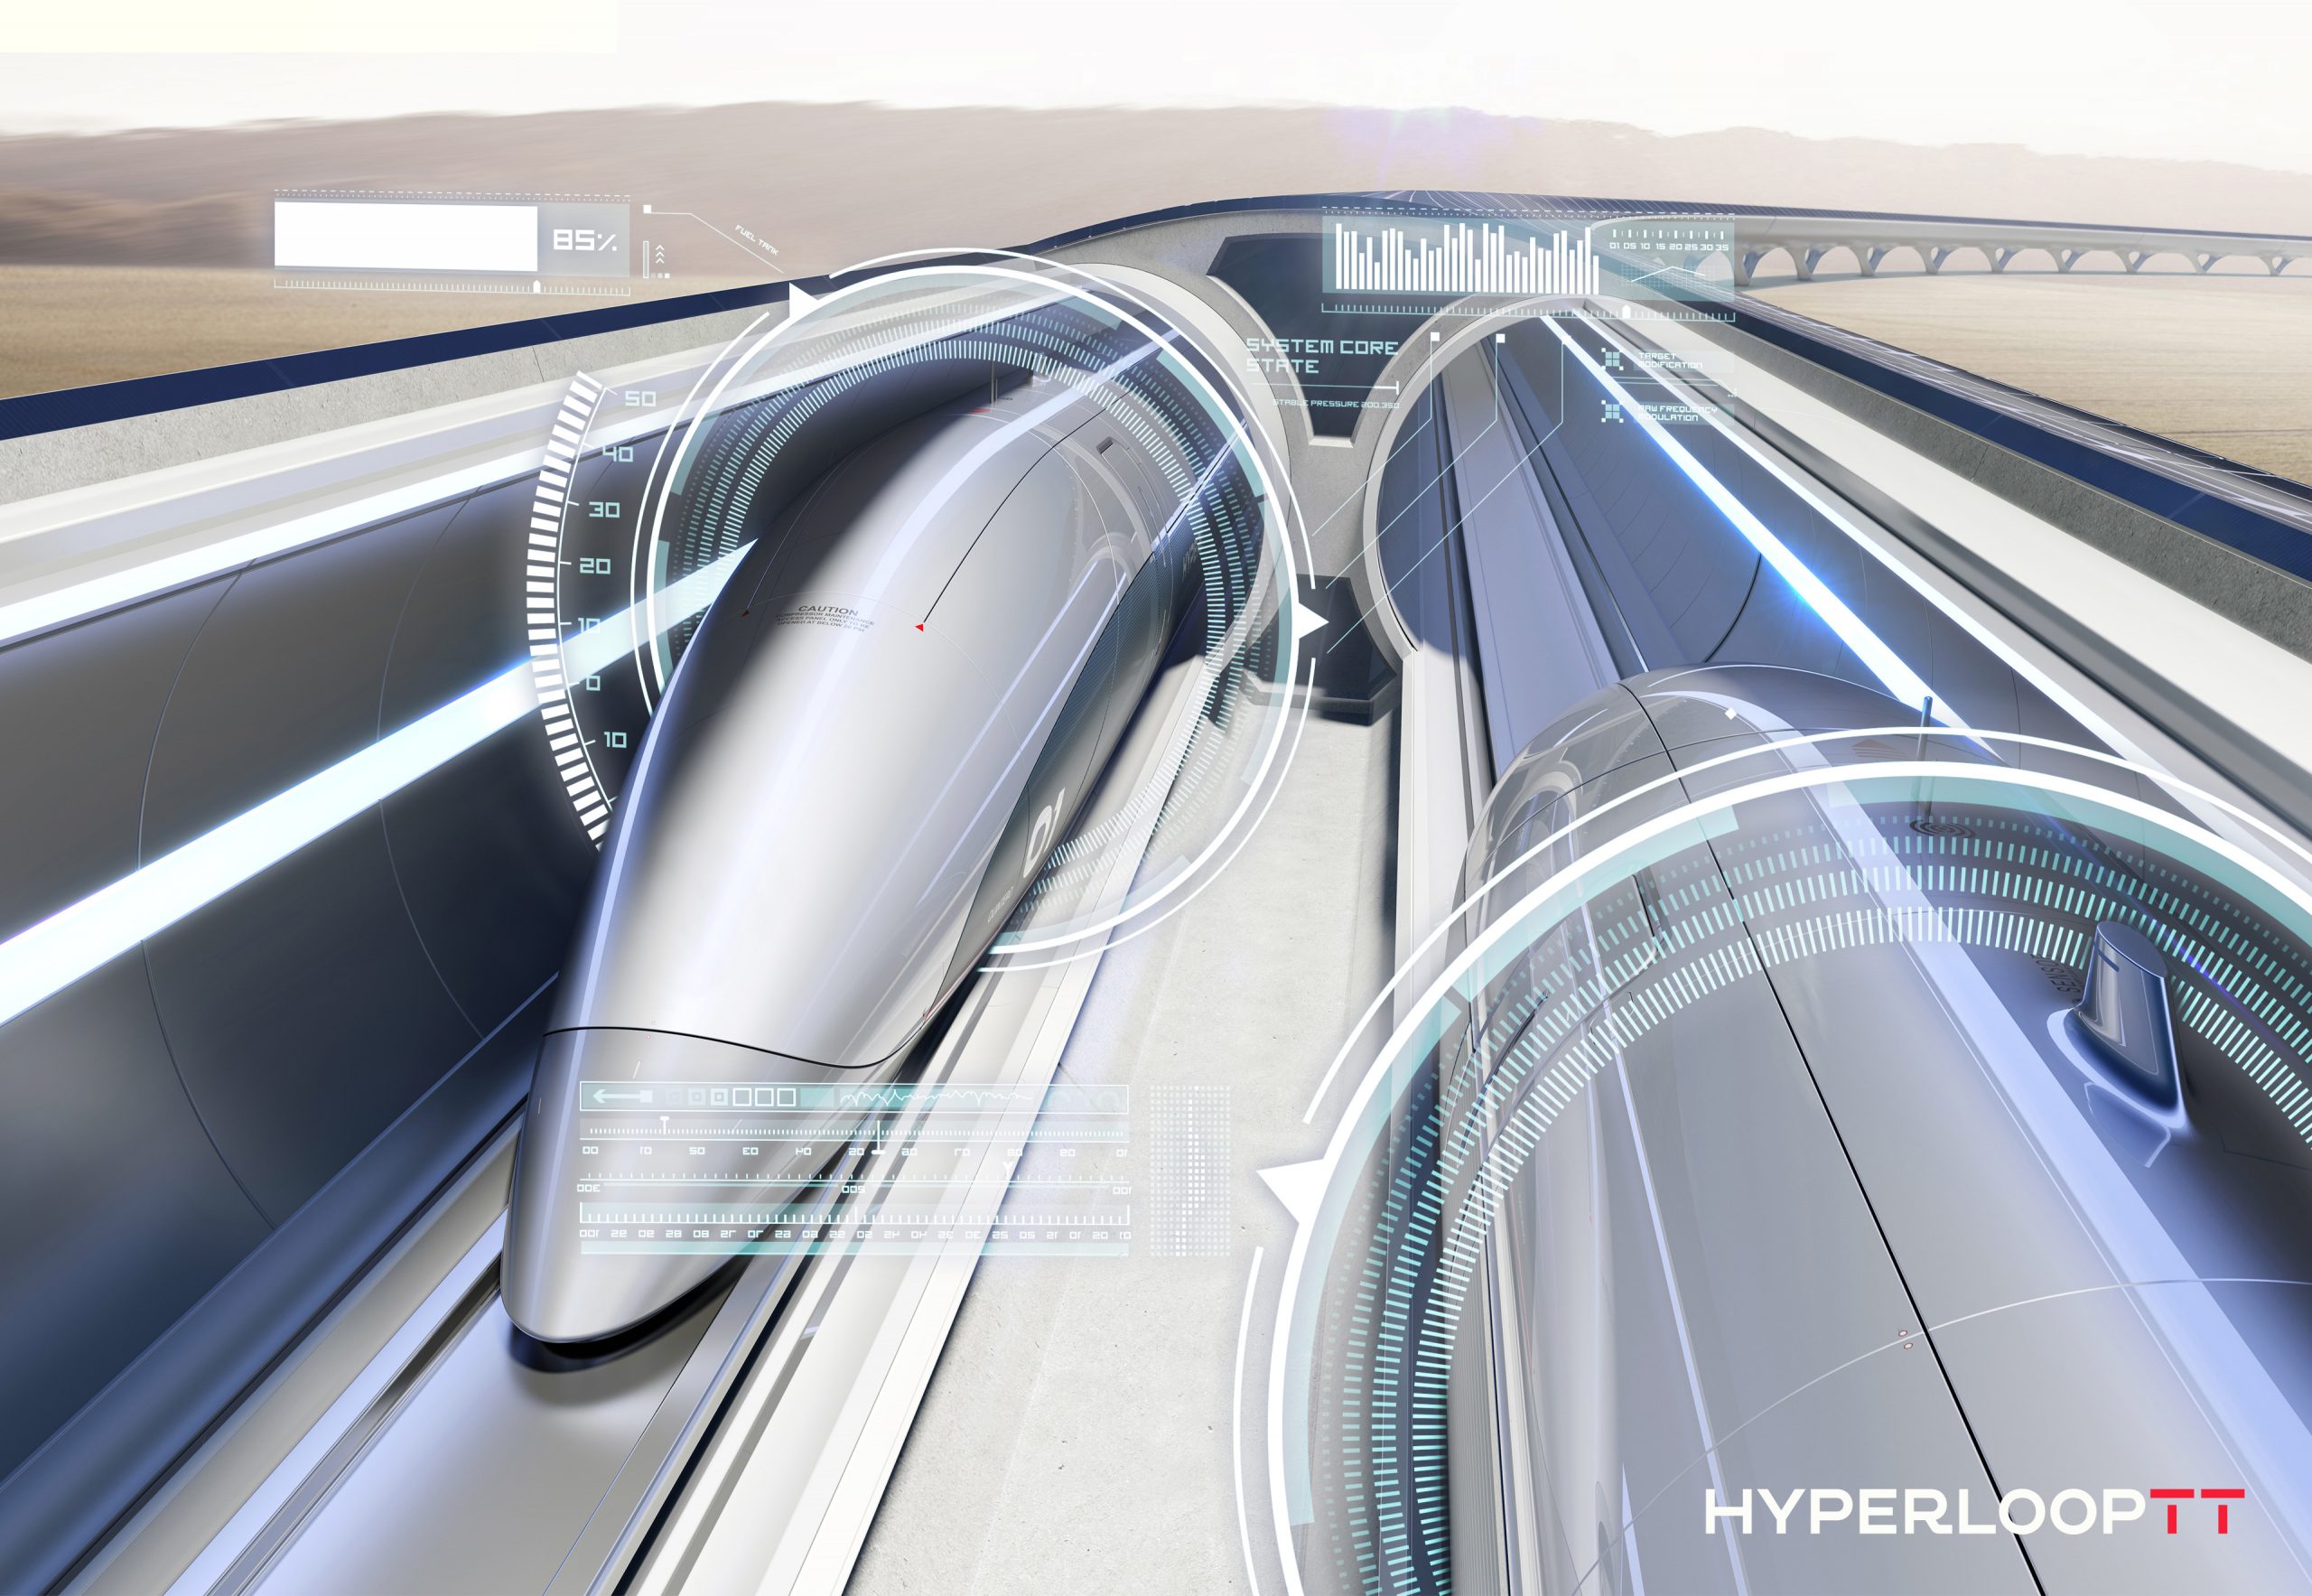 HyperloopTT, Hitachi Rail image